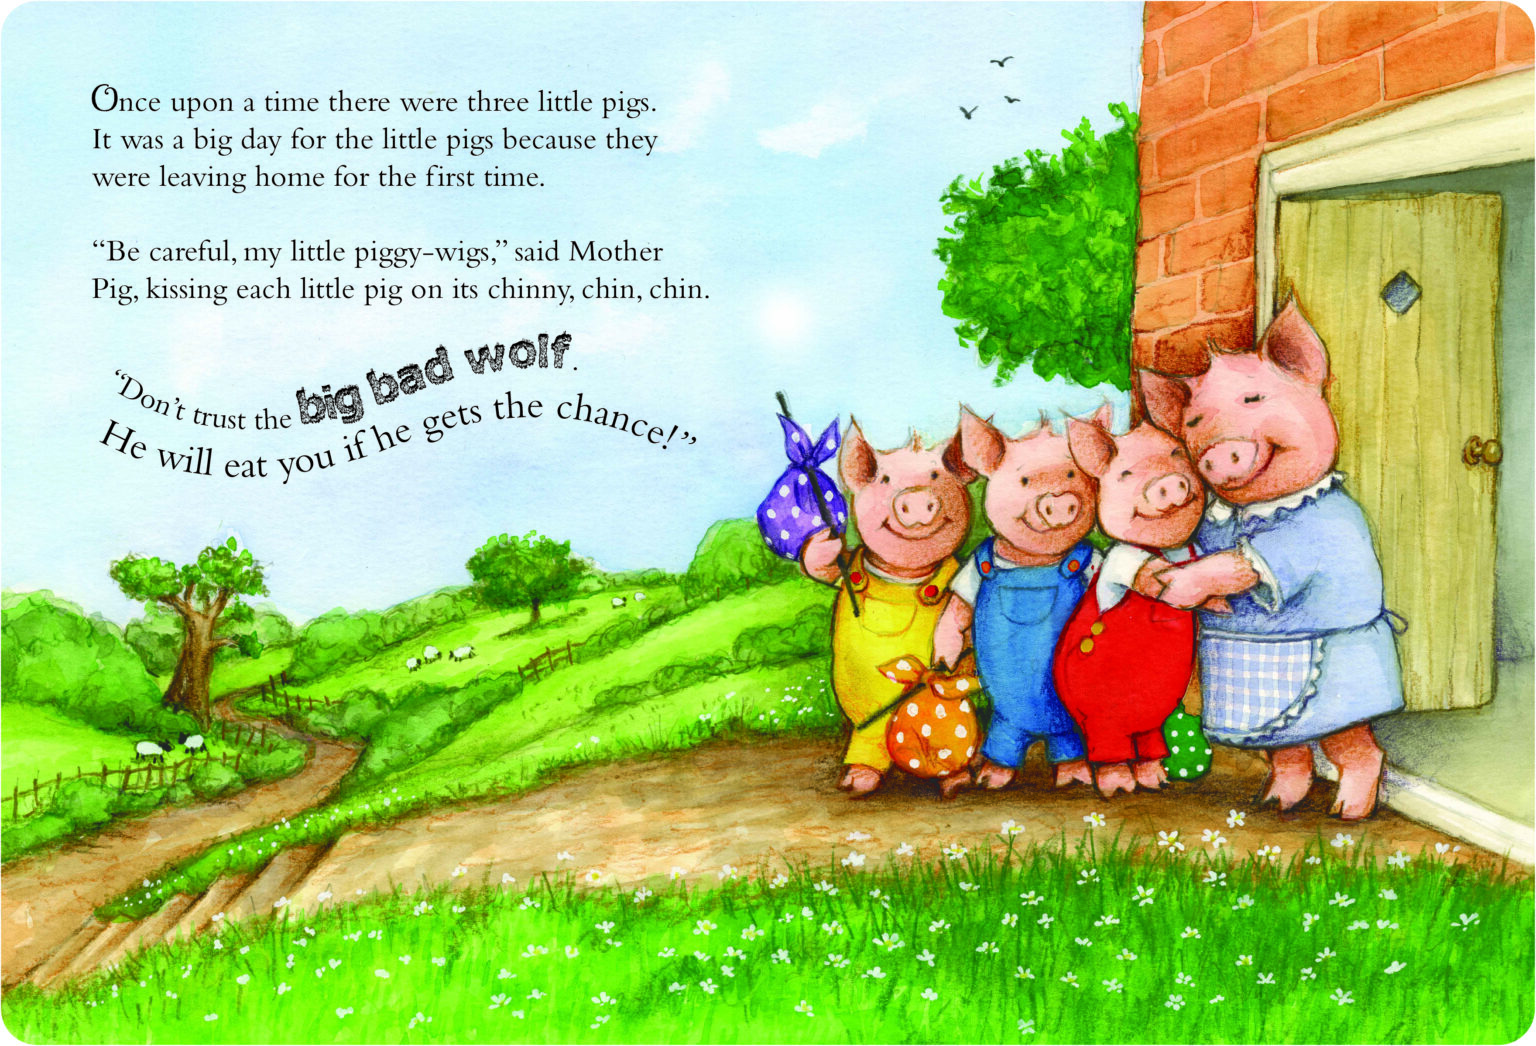 my-favorite-fairy-tales-the-three-little-pigs-kidsbooks-publishing